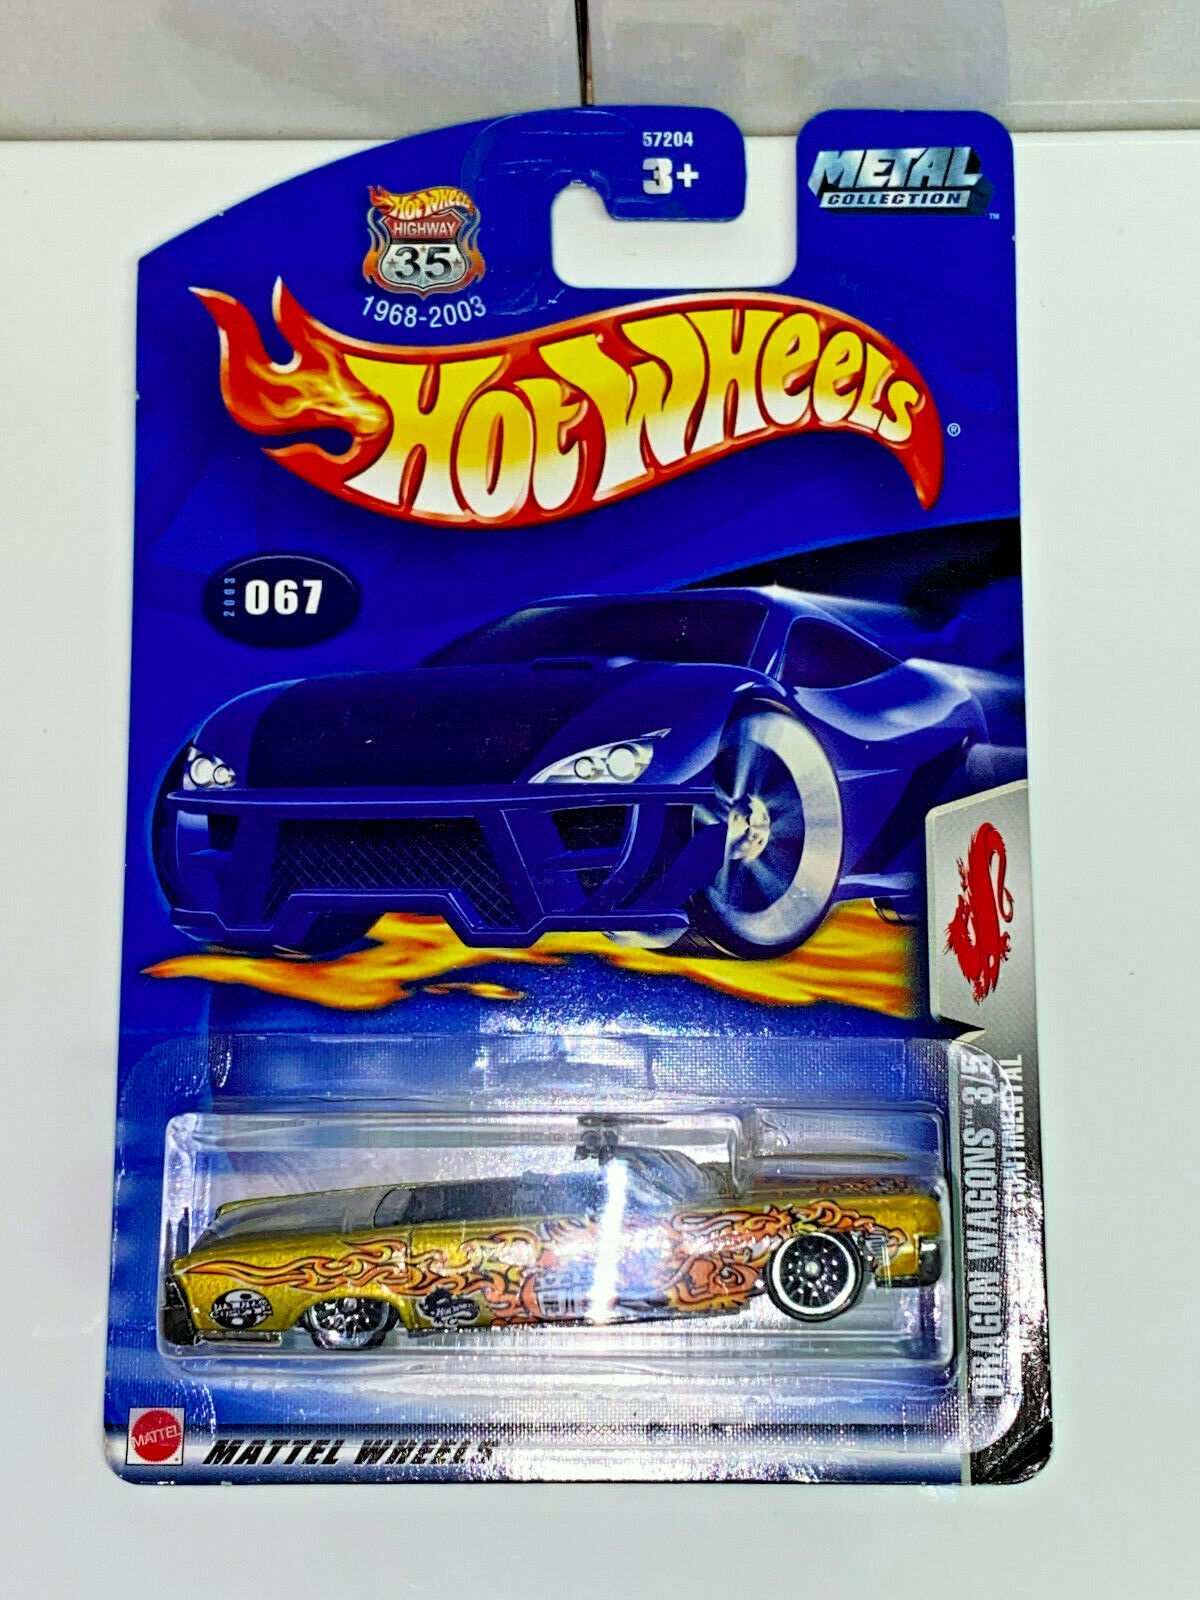 2003 Hot Wheels Dragon Wagons Full Set Lot of 5 Cars #065, #066, #067, #068,#069